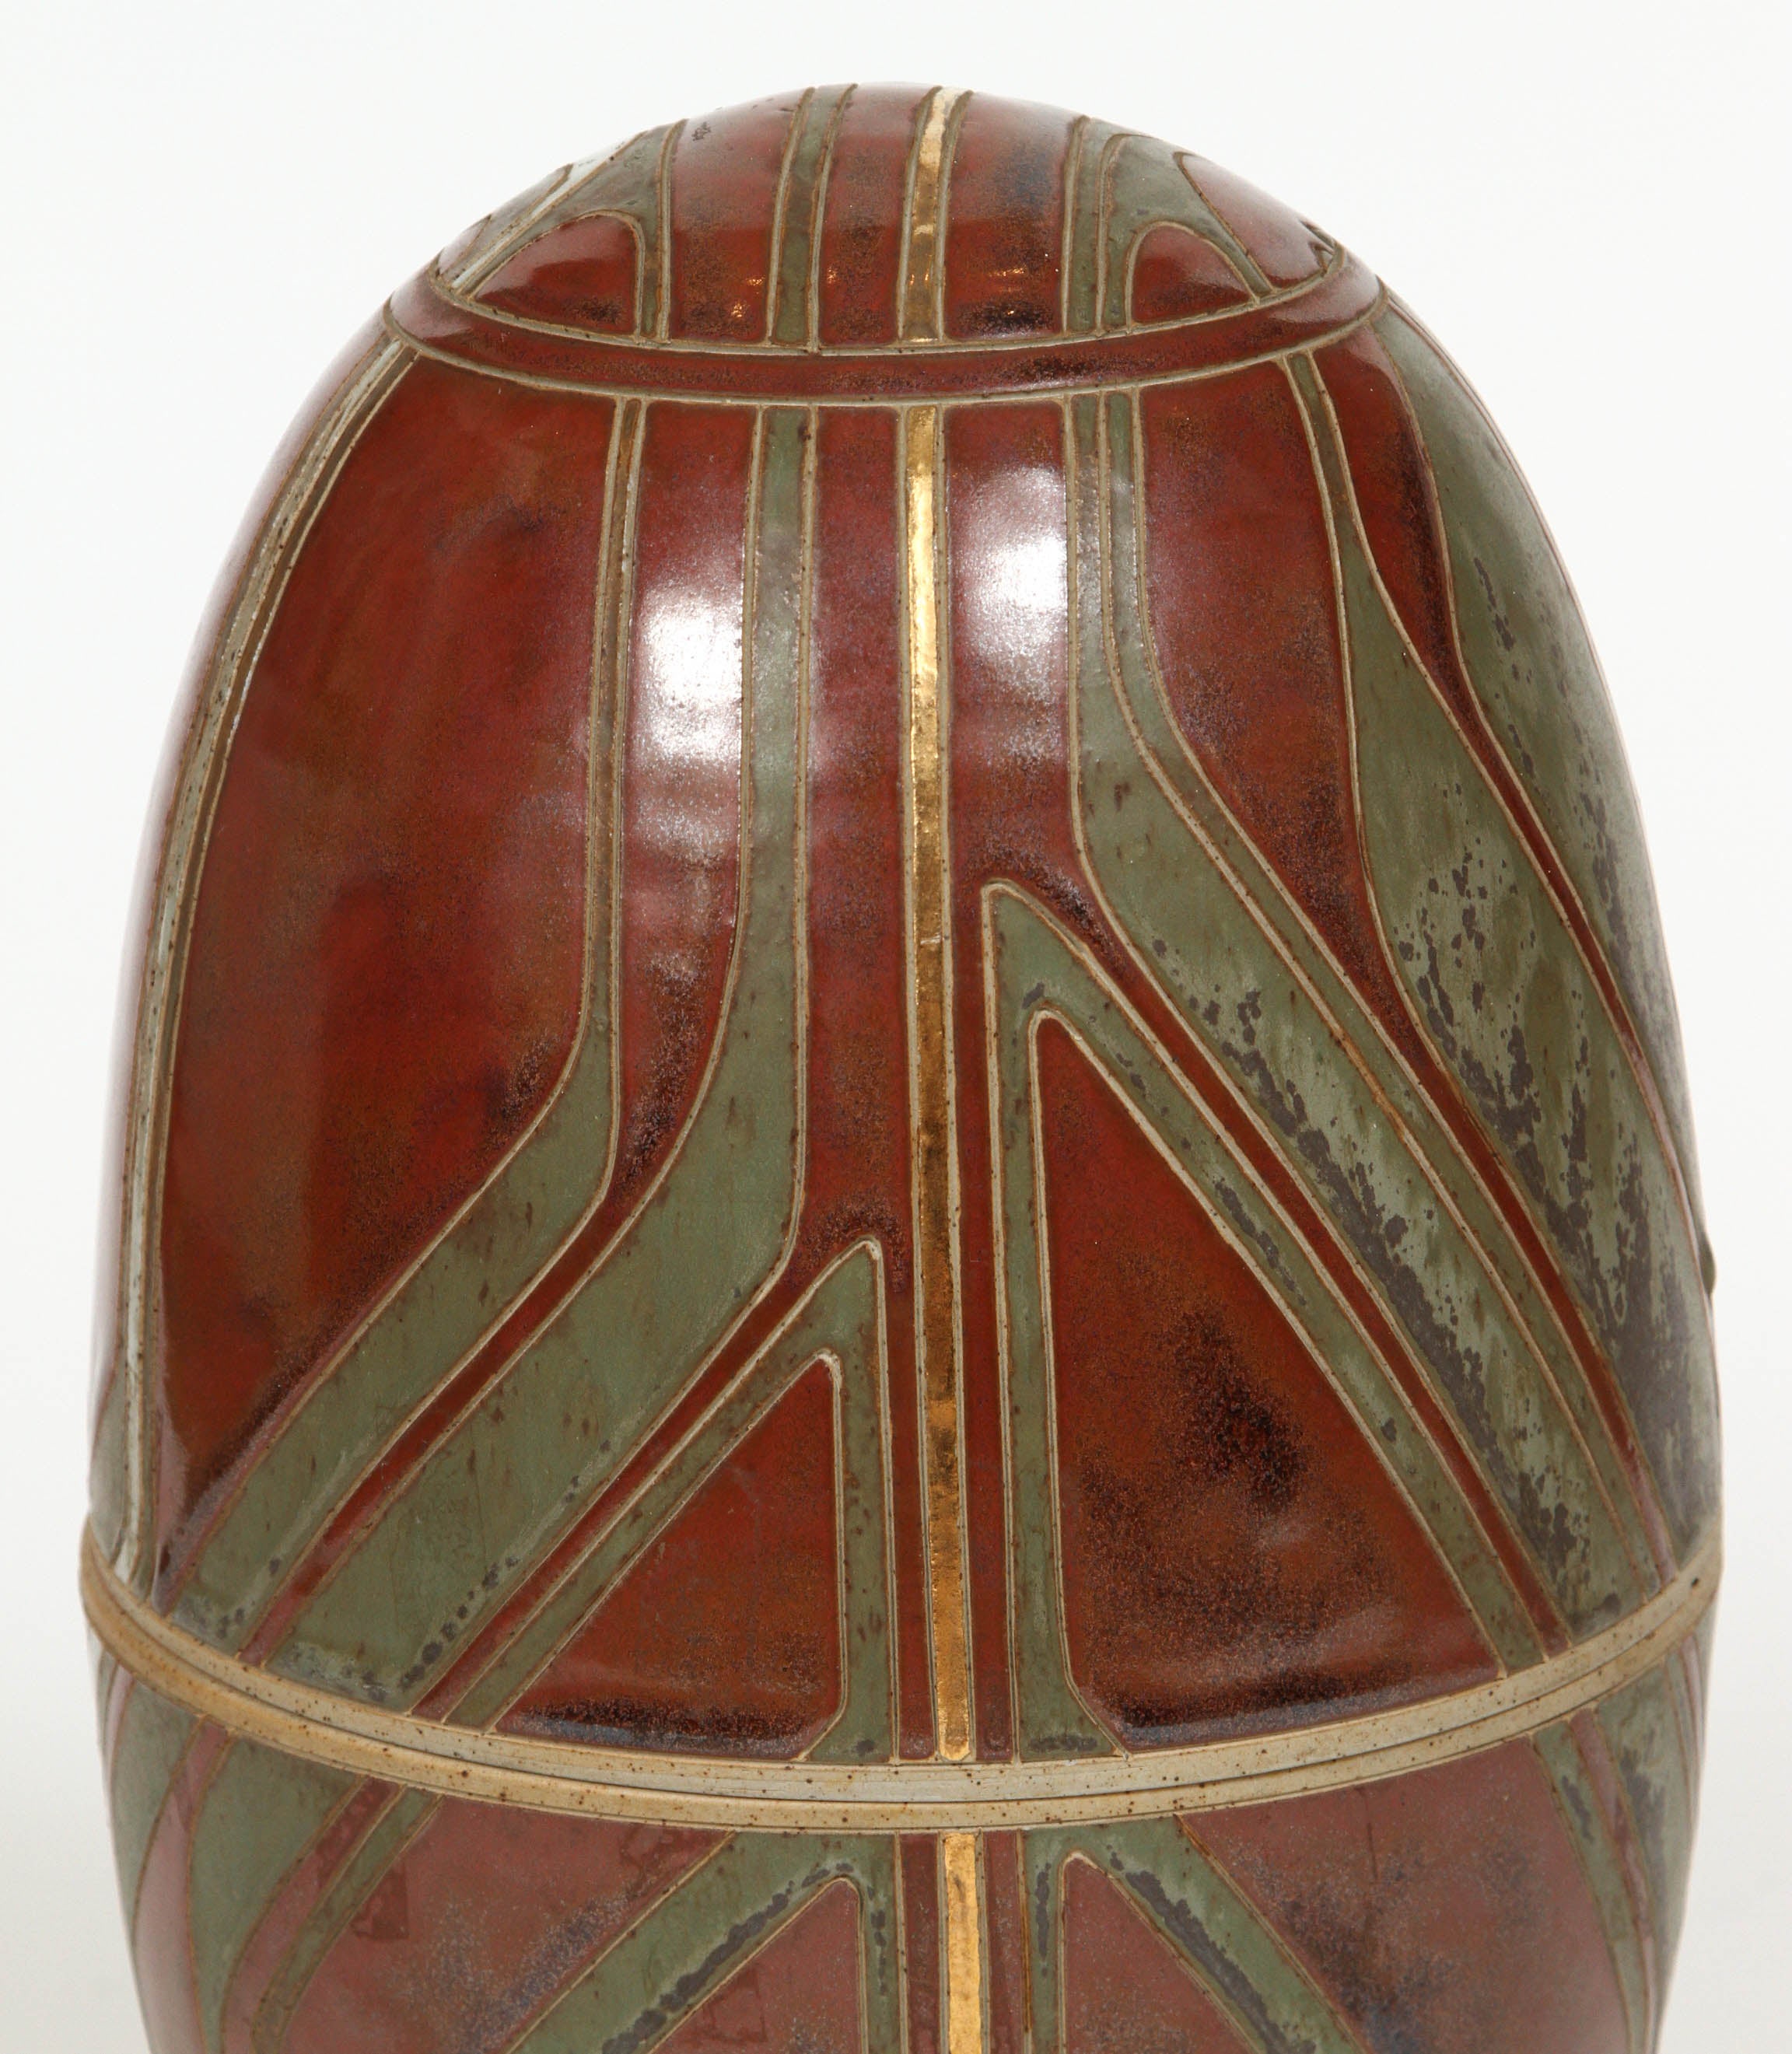 Vintage decorative ceramic egg box with Art Nouveau inspired pattern.